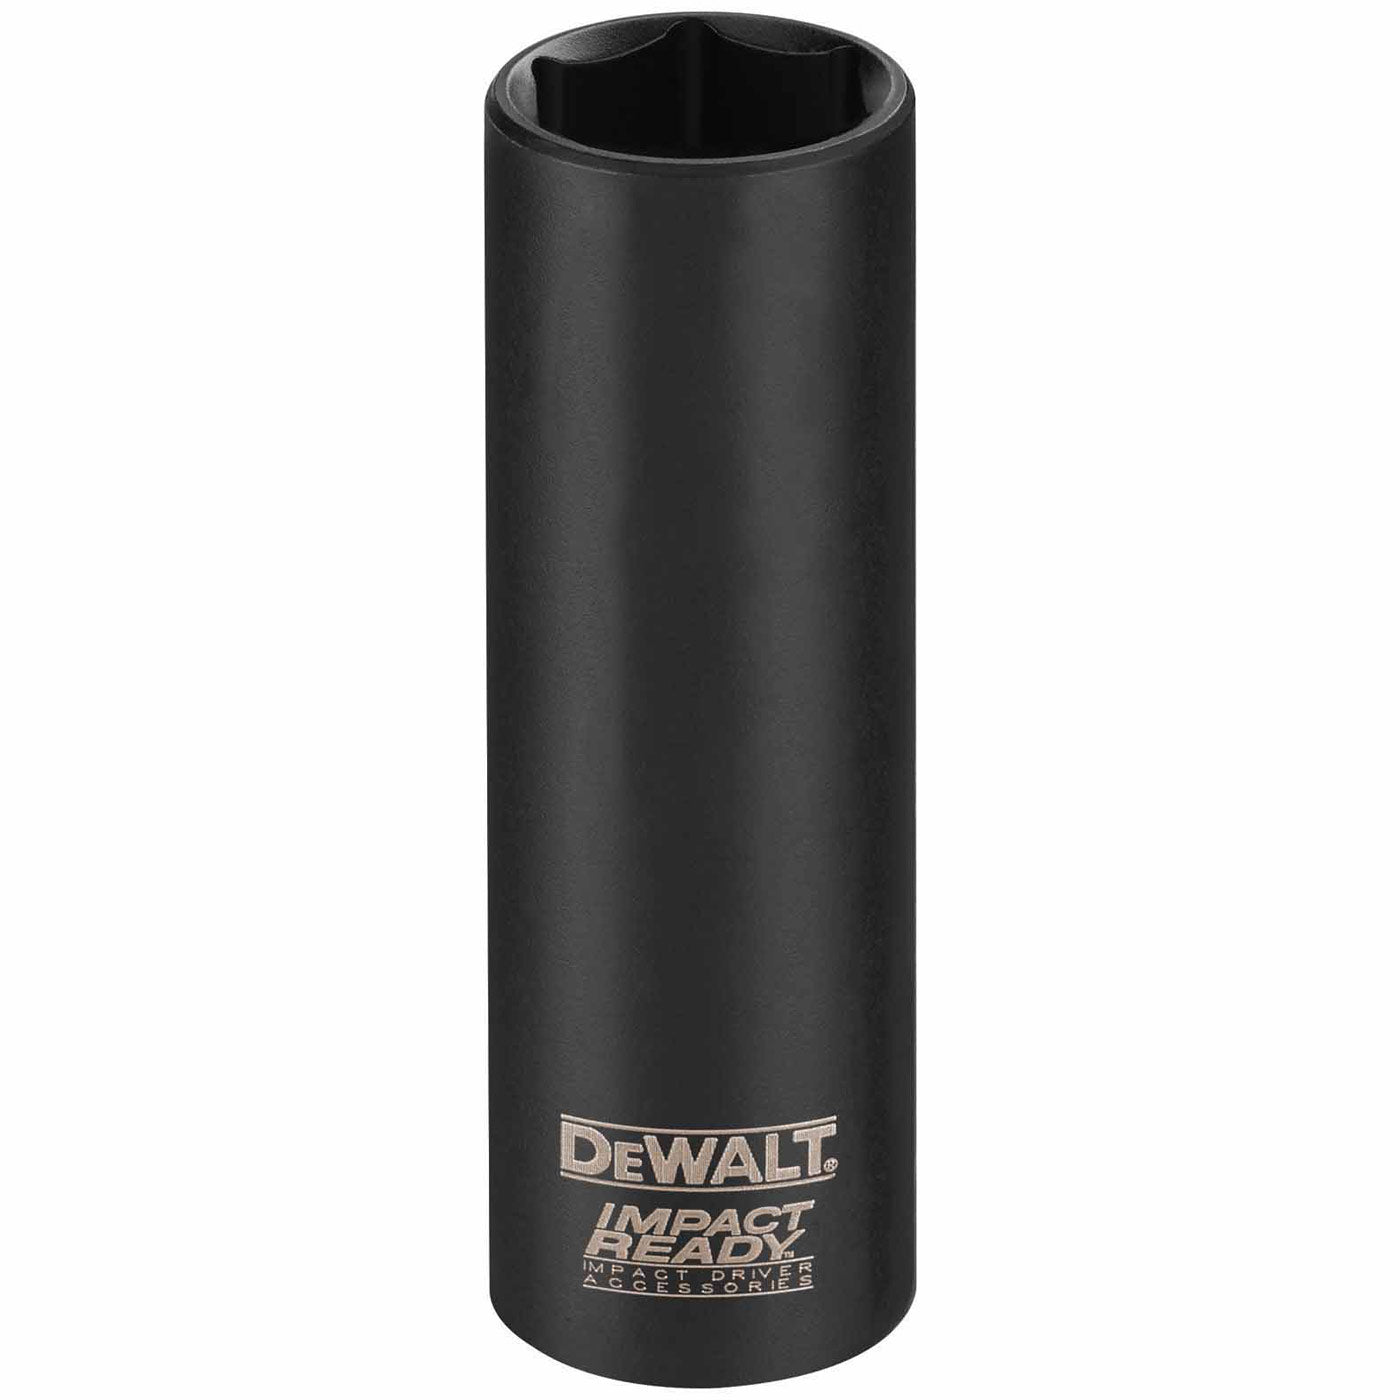 DeWalt DW22902 3/4" Deep Pocket Impact Ready Socket 1/2"